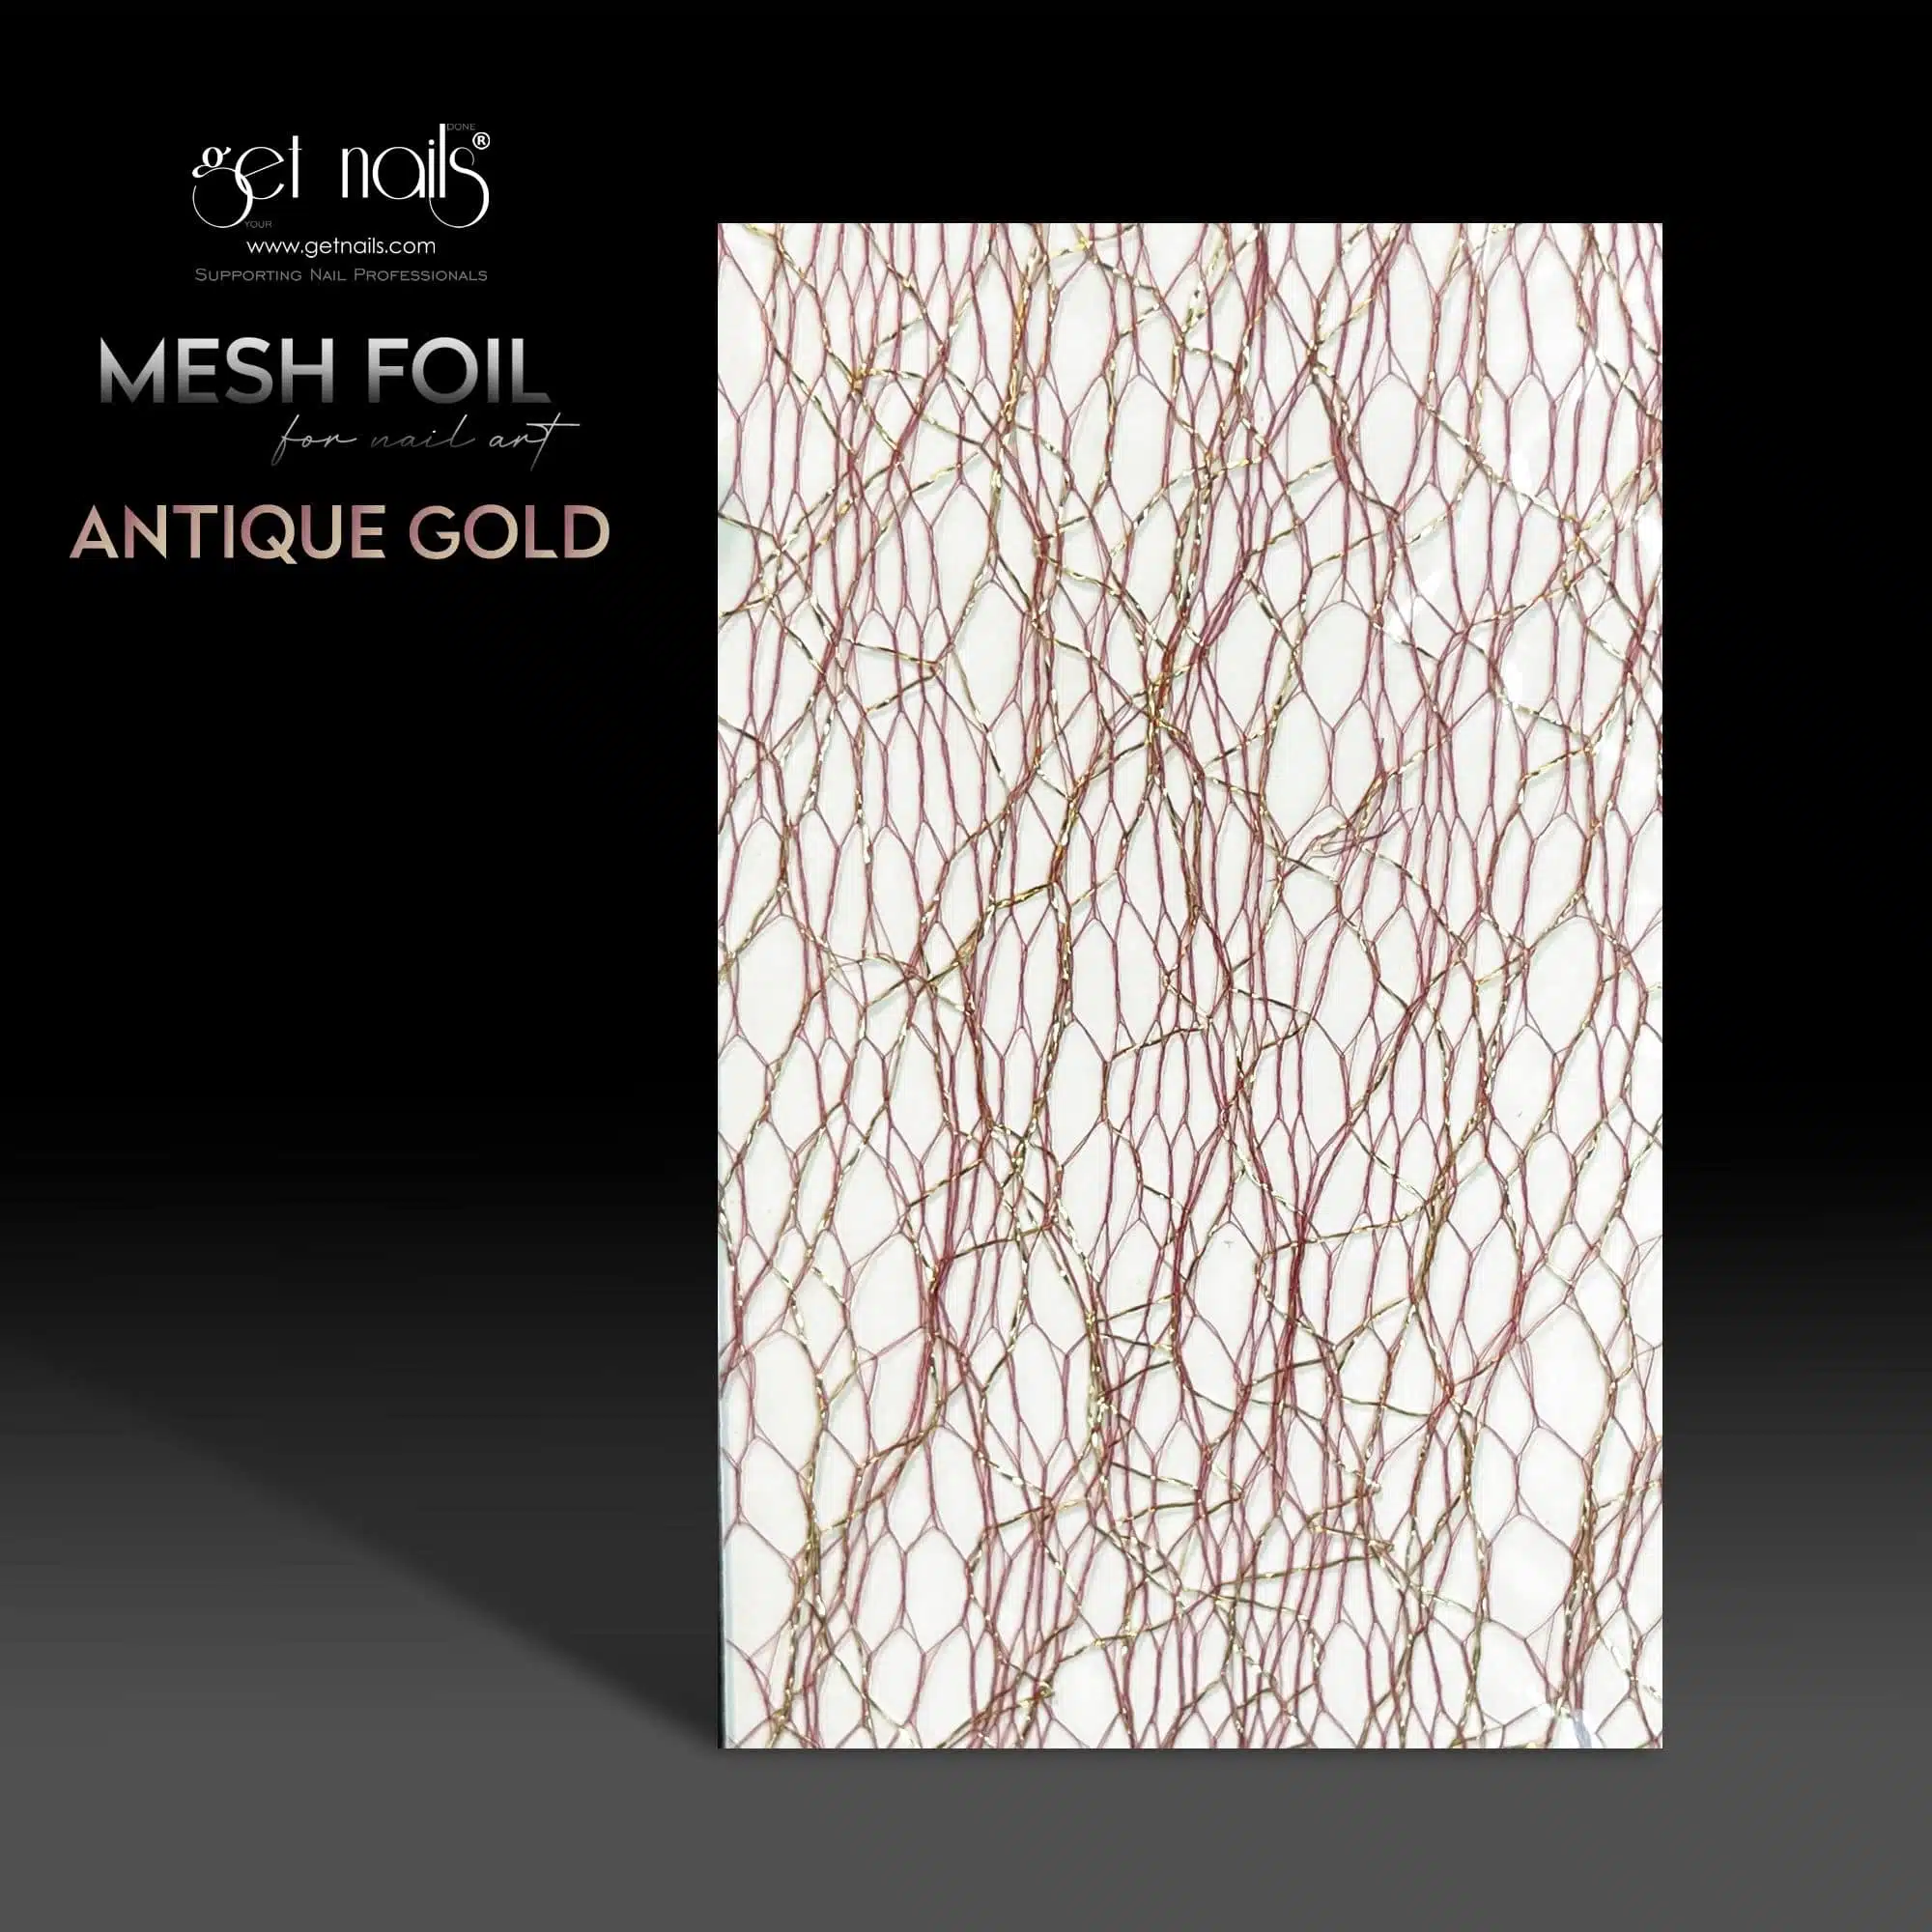 Get Nails Austria - Mesh Folie Antique Gold